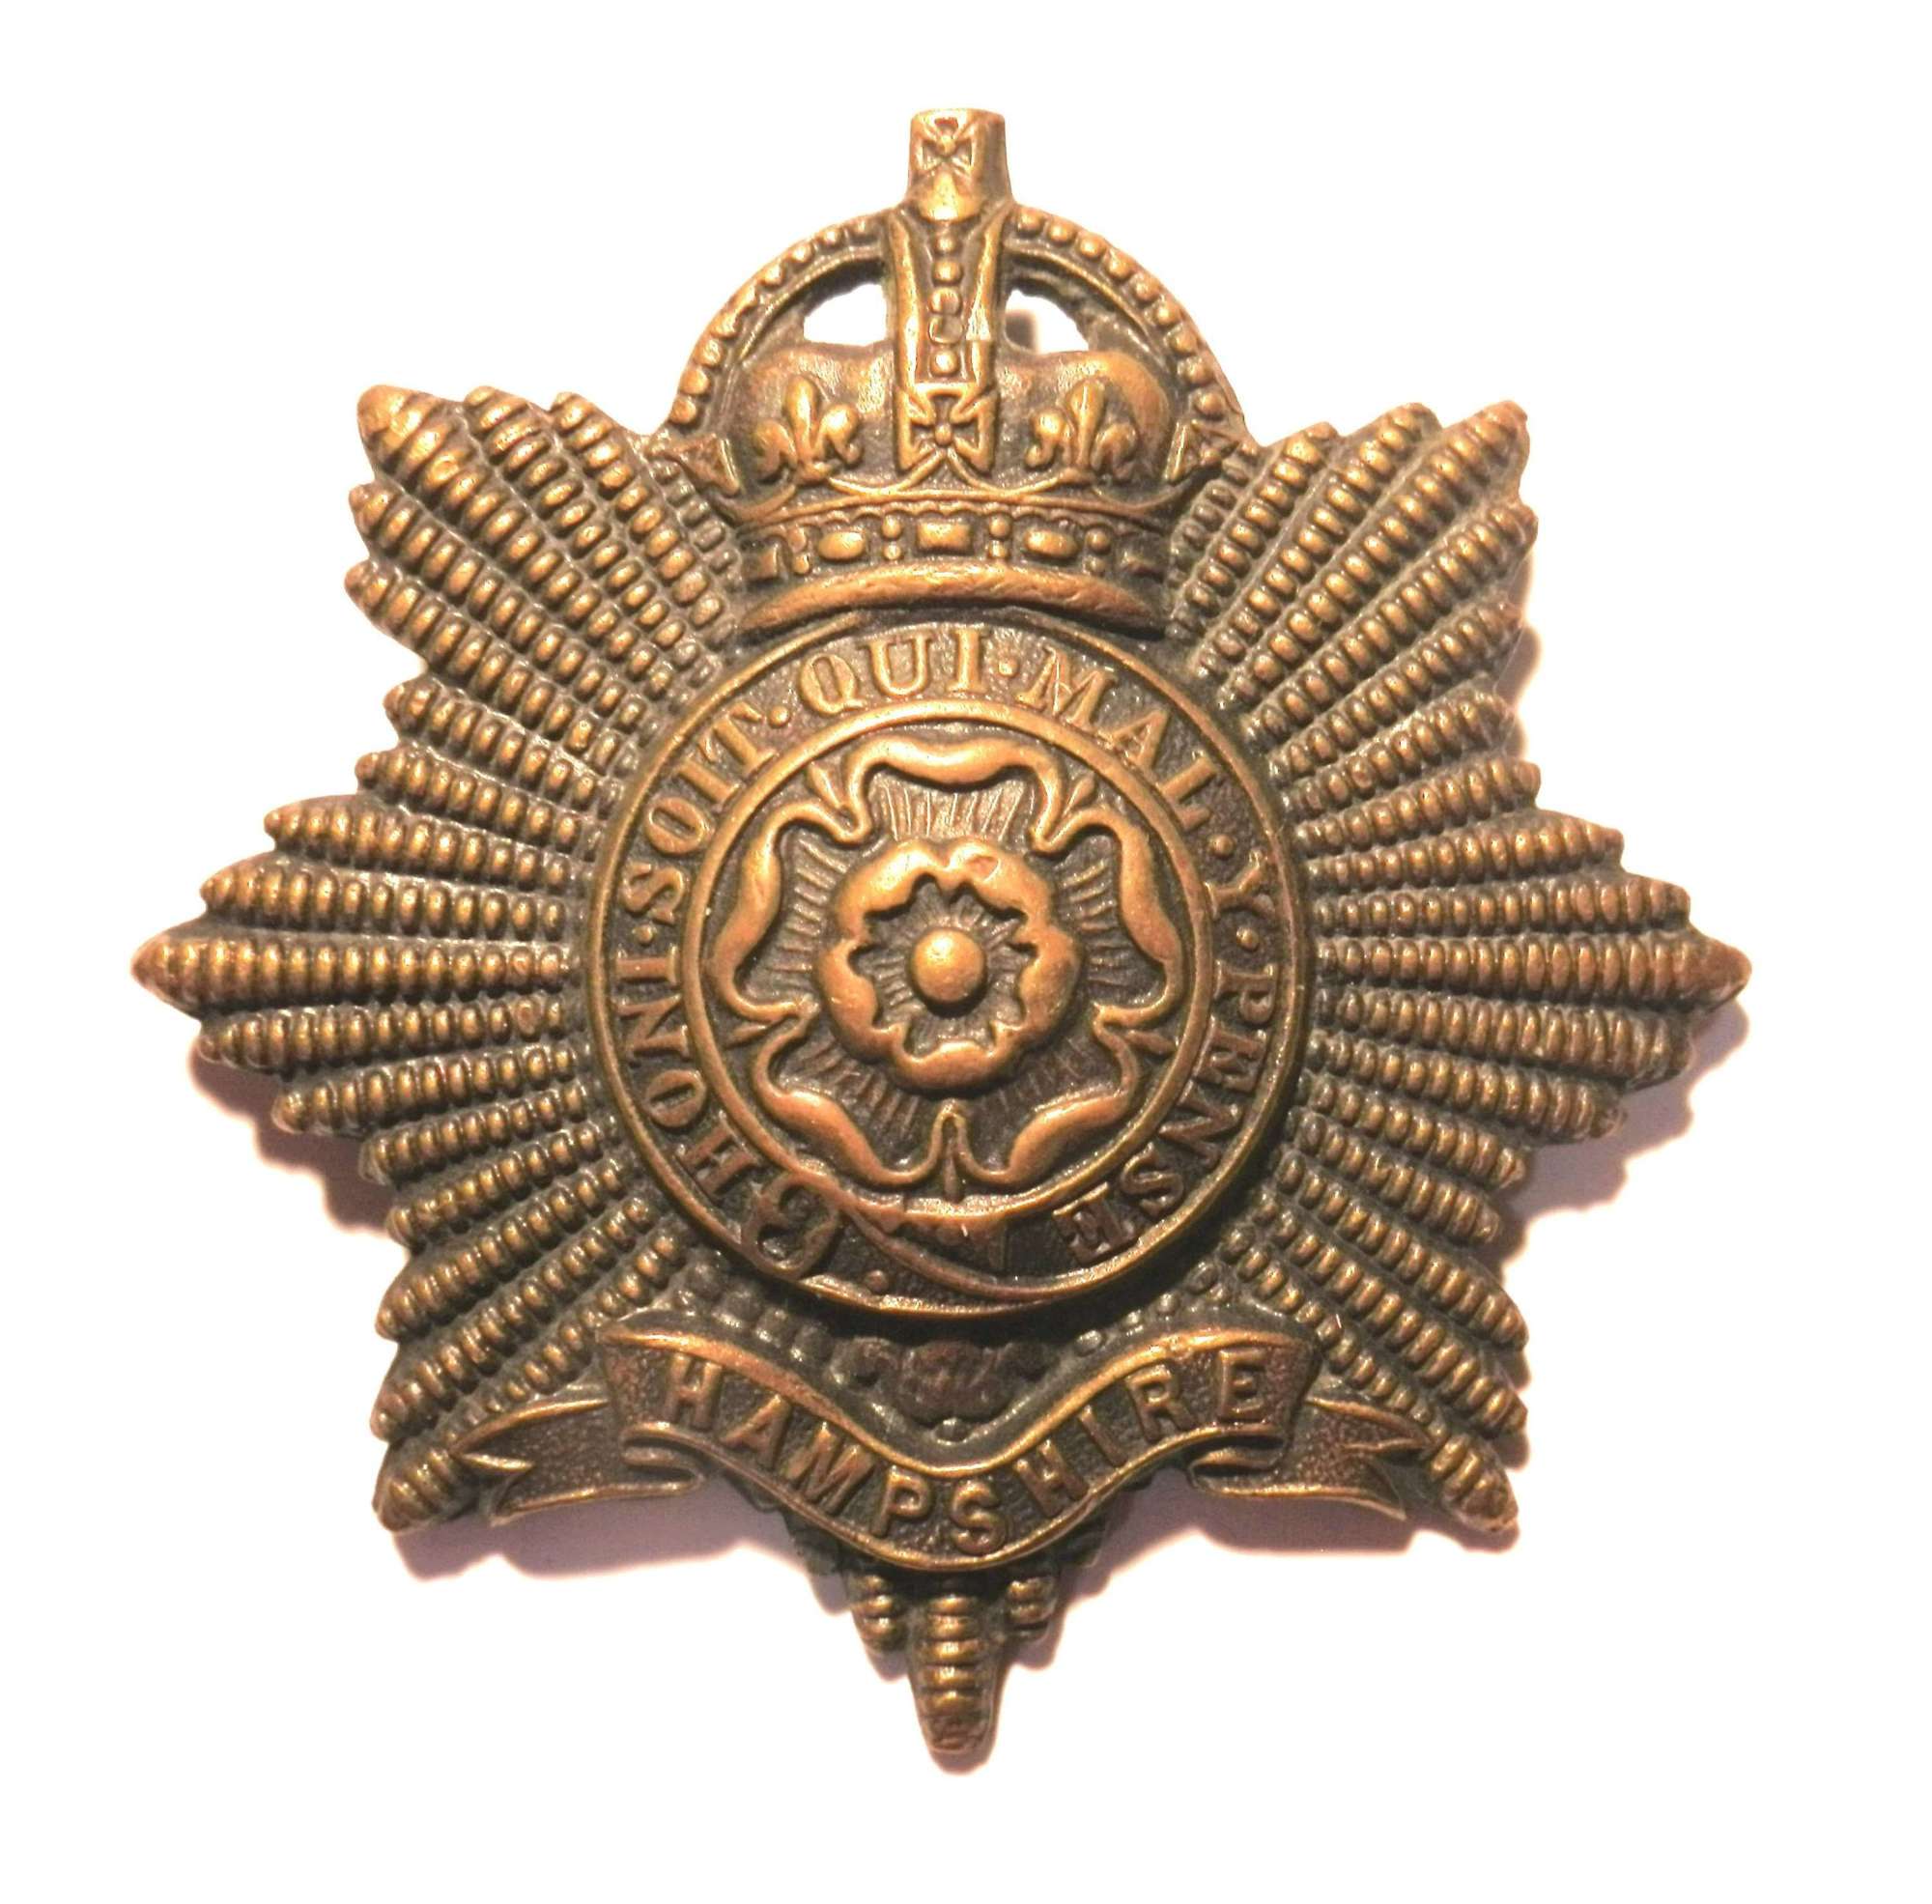 The Hampshire Regiment Officers Cap Badge.